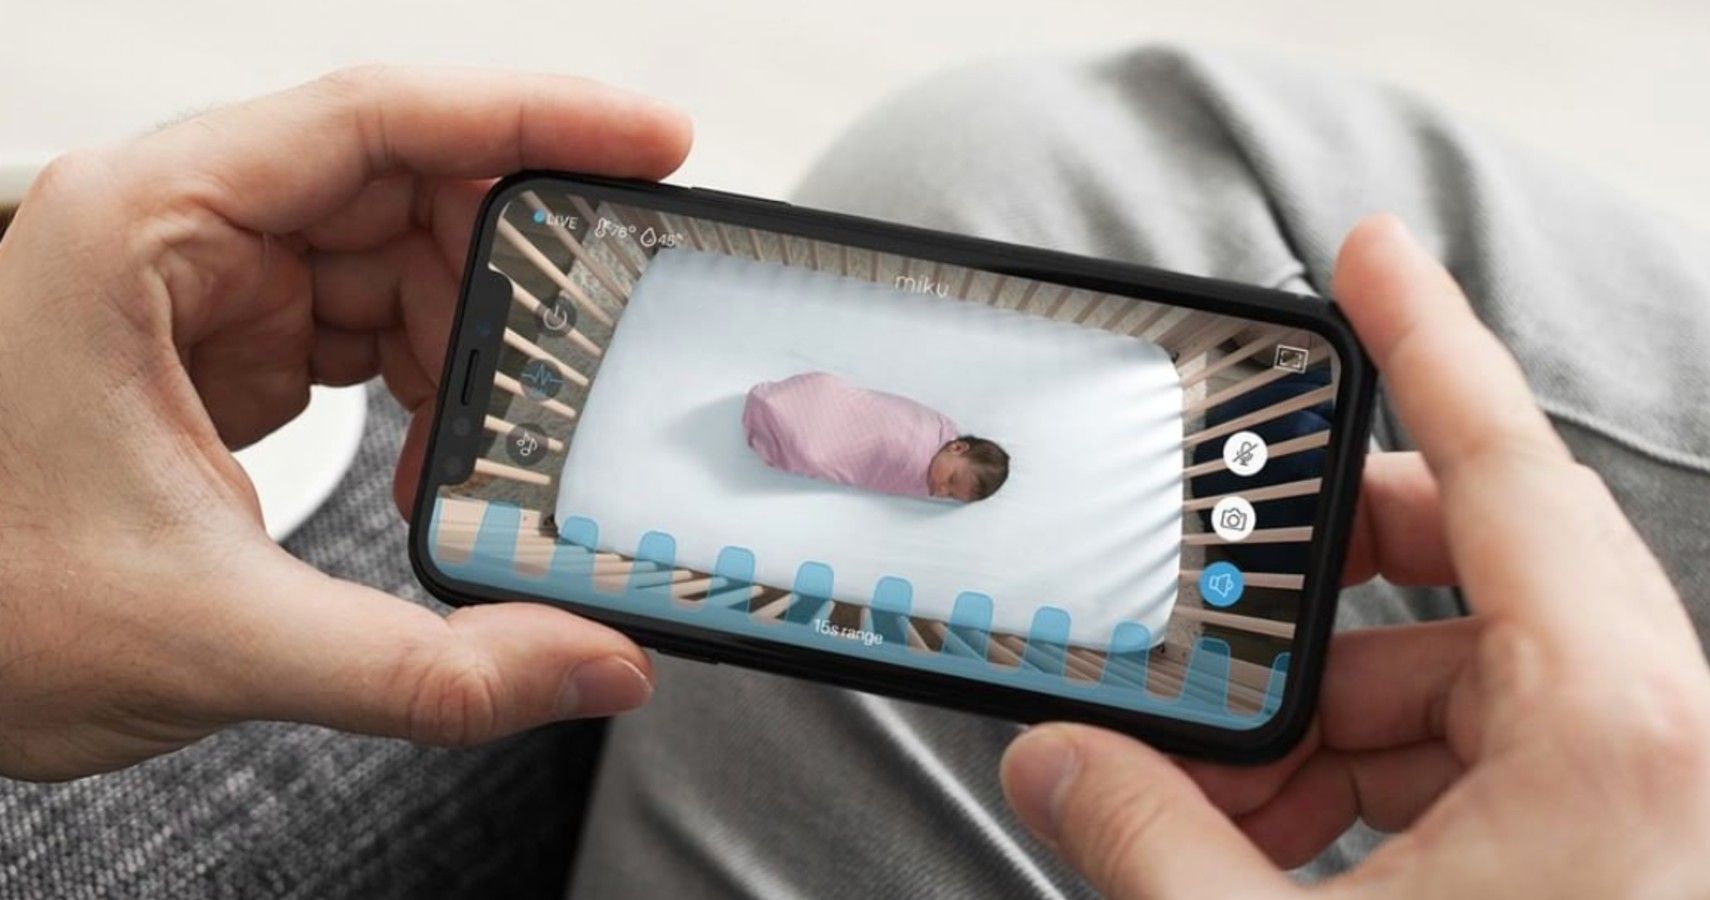 Miku smart baby monitor tracks baby sleeping and breathing patterns